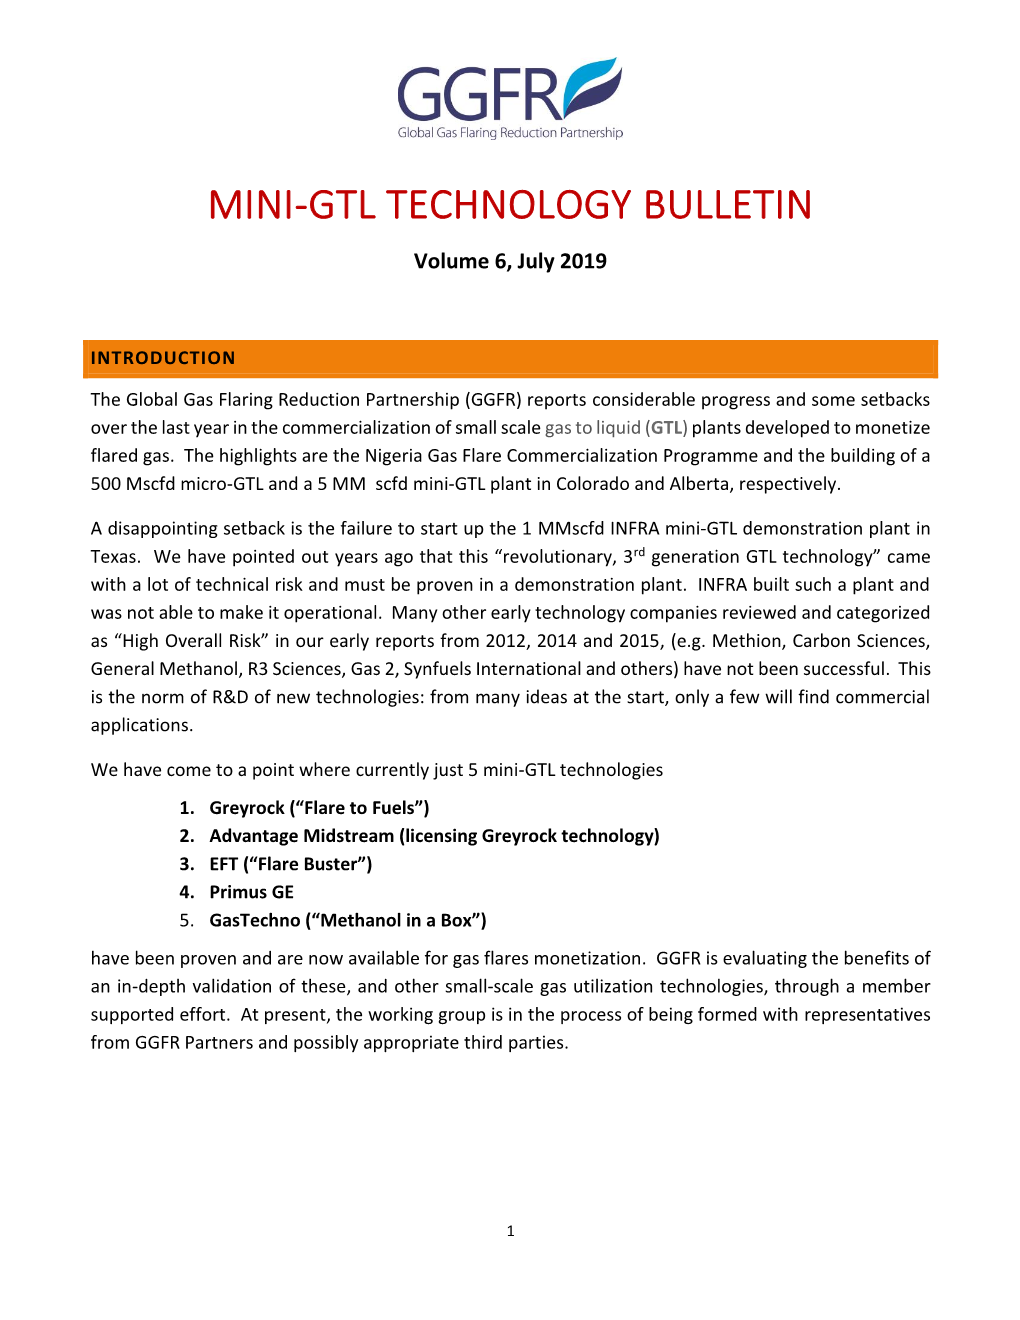 MINI-GTL TECHNOLOGY BULLETIN Volume 6, July 2019